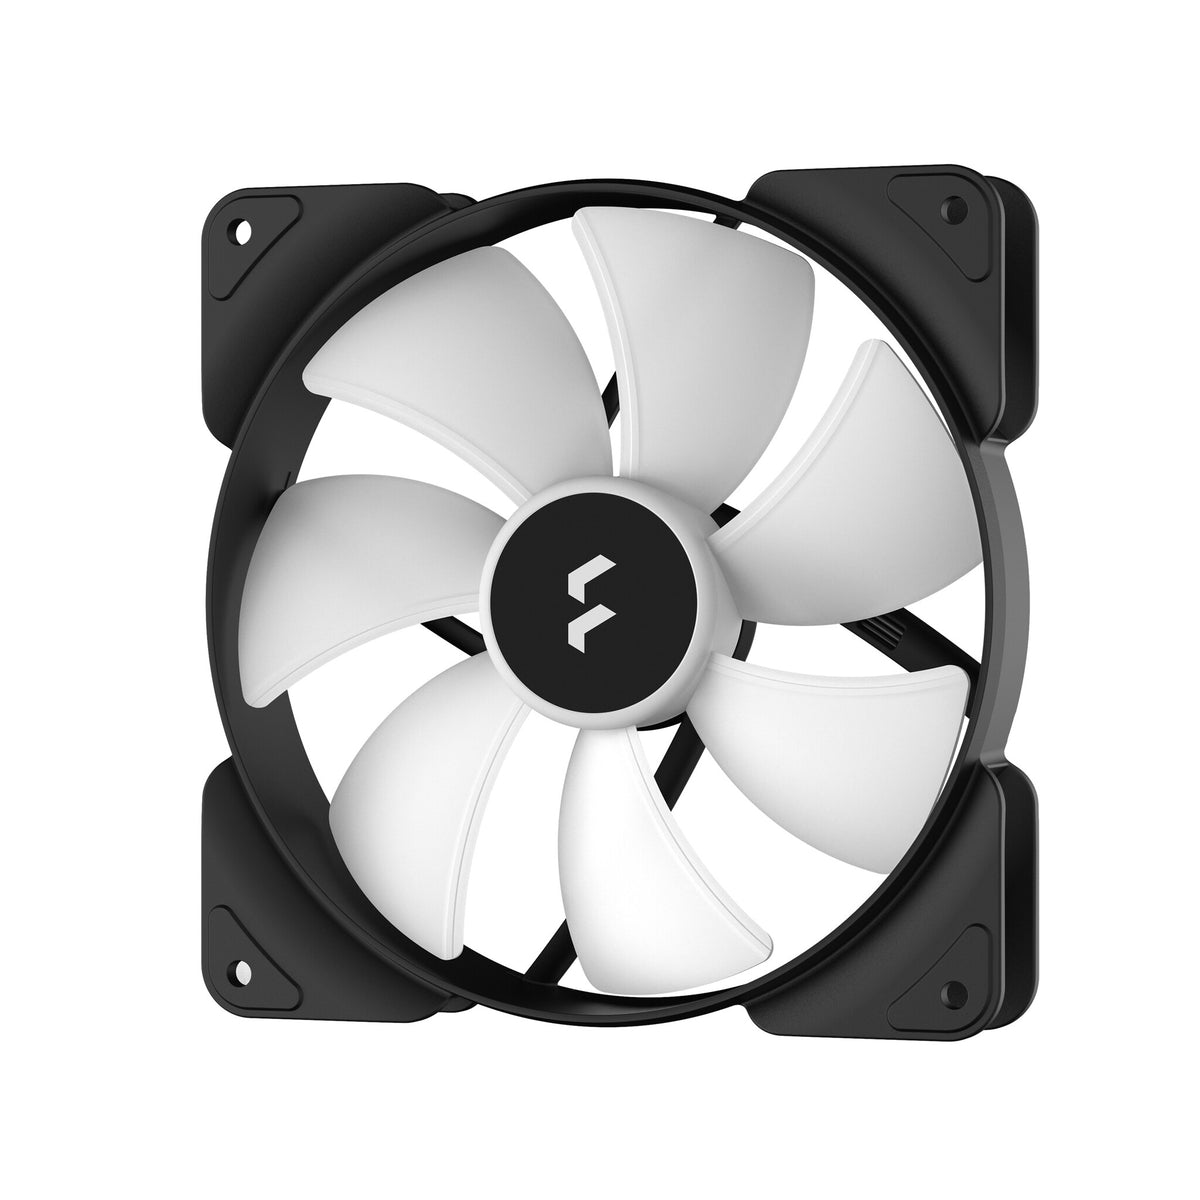 Fractal Design Aspect 14 RGB - Computer Case Fan in Black - 140mm